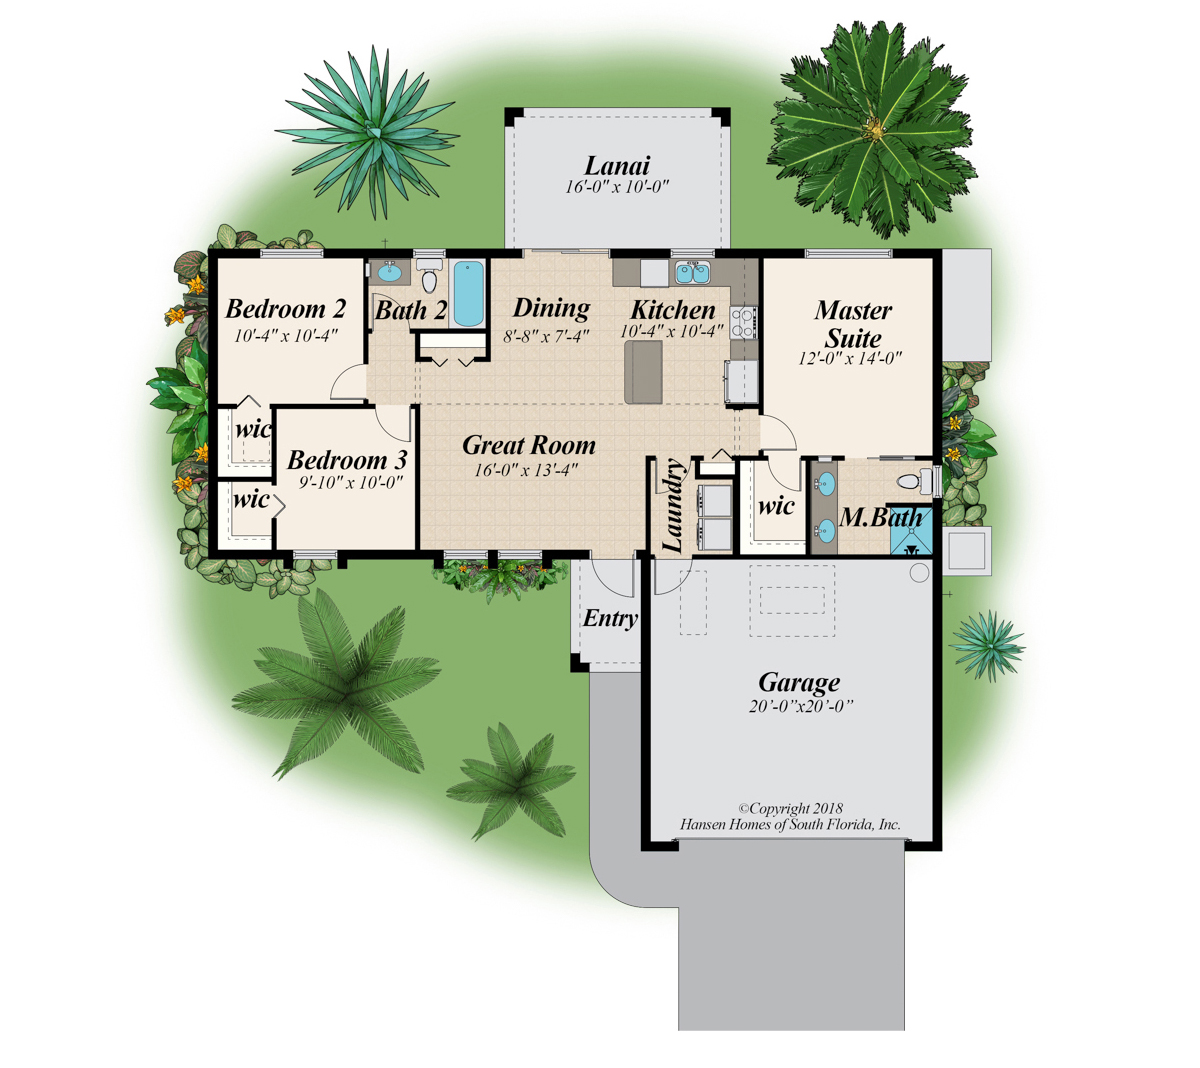 The Bayshore Home Plan, 4 Bedroom, 2 Bath, 2 Car Garage, 1,144 Sq. Ft